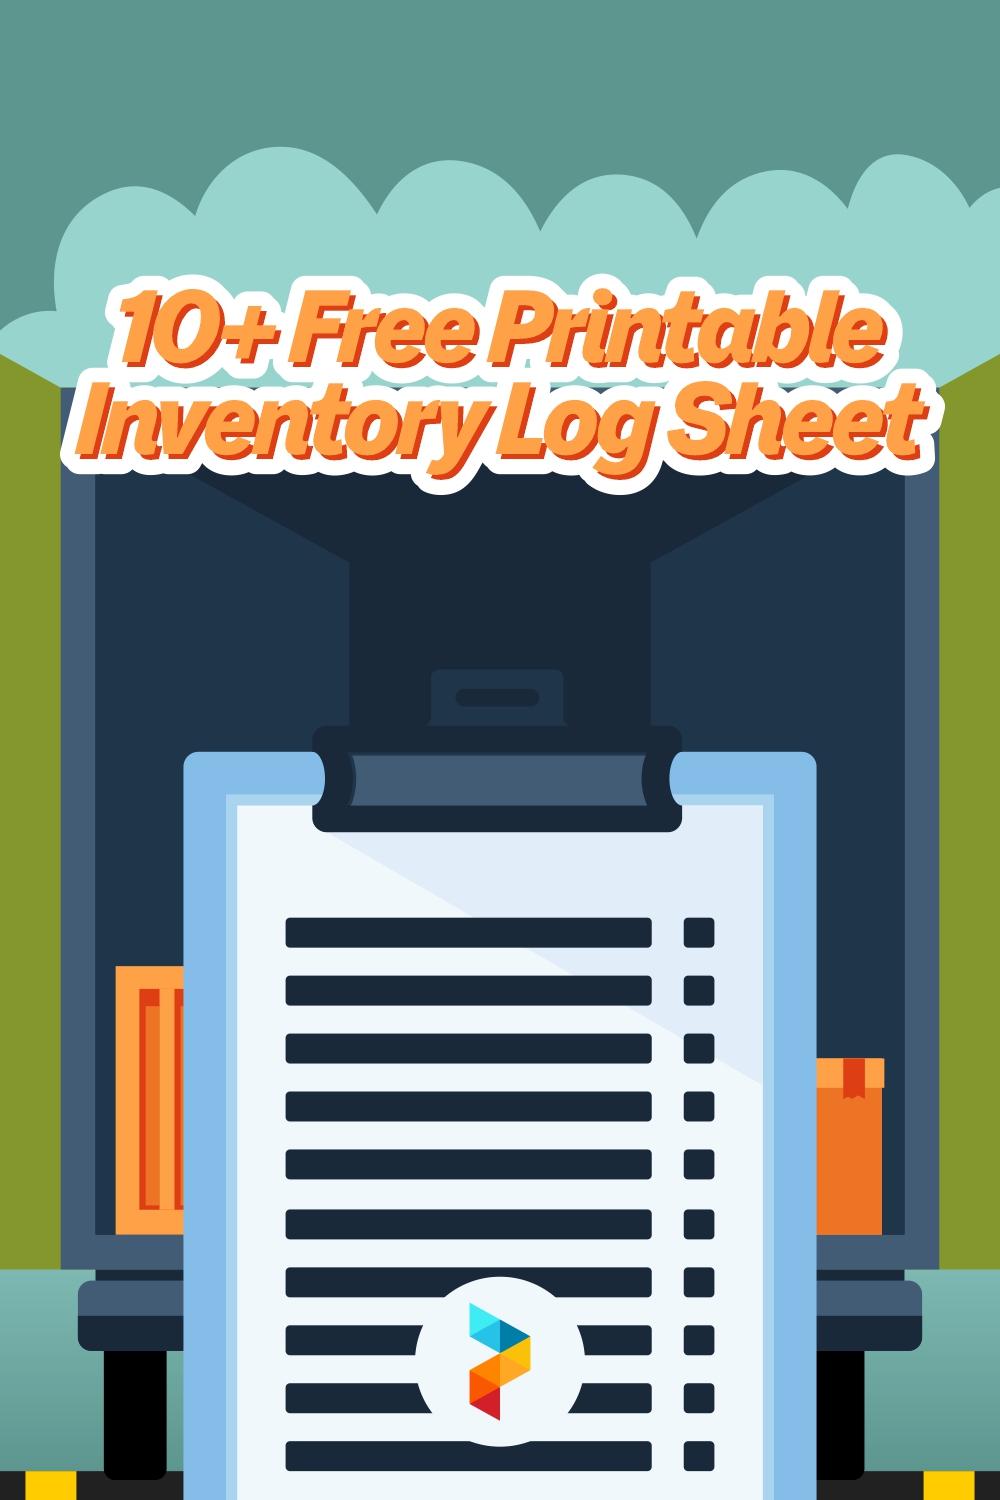 Inventory Log Sheet